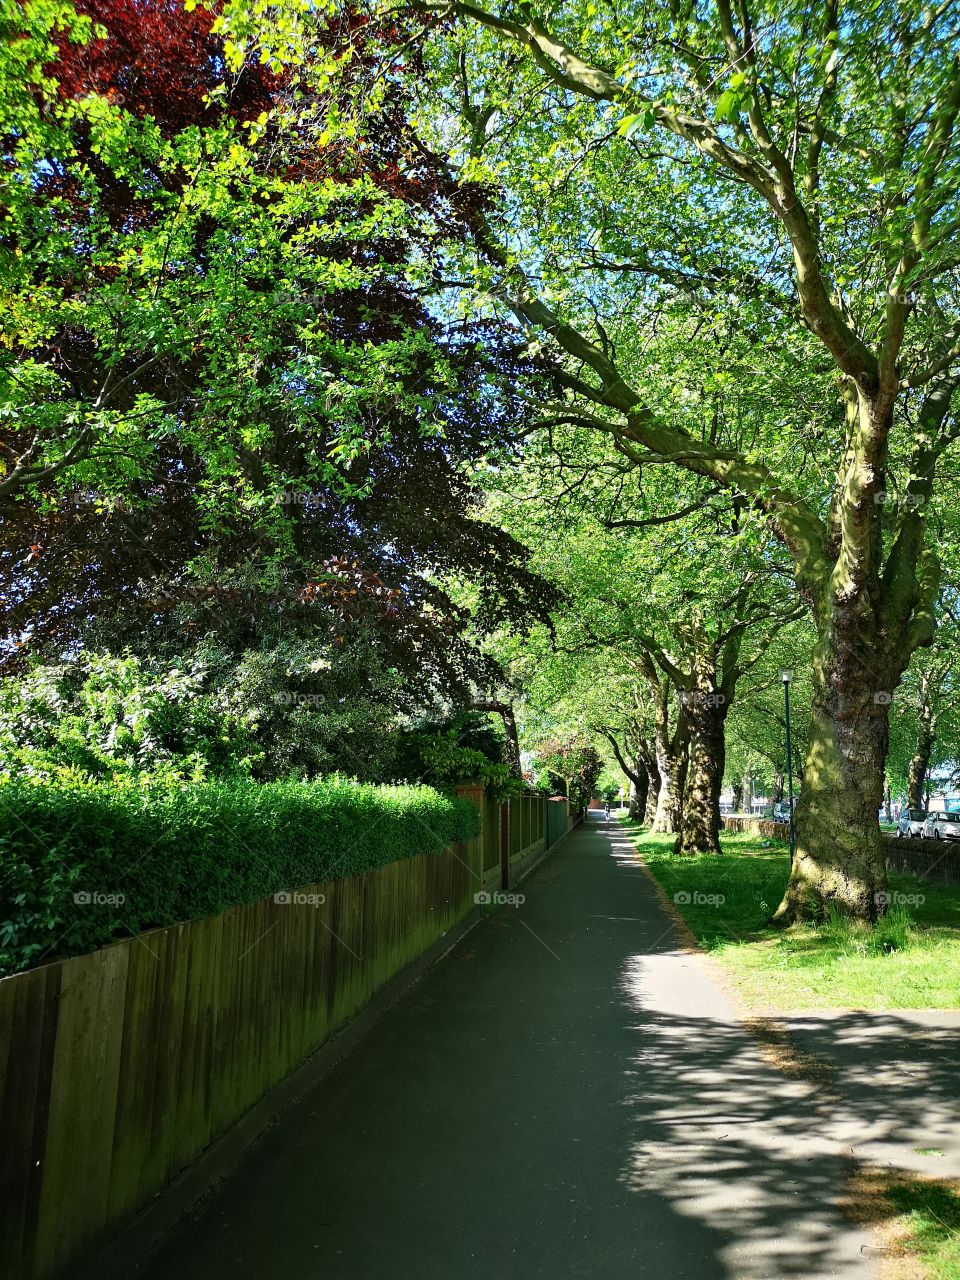 Green walkway tree-lined